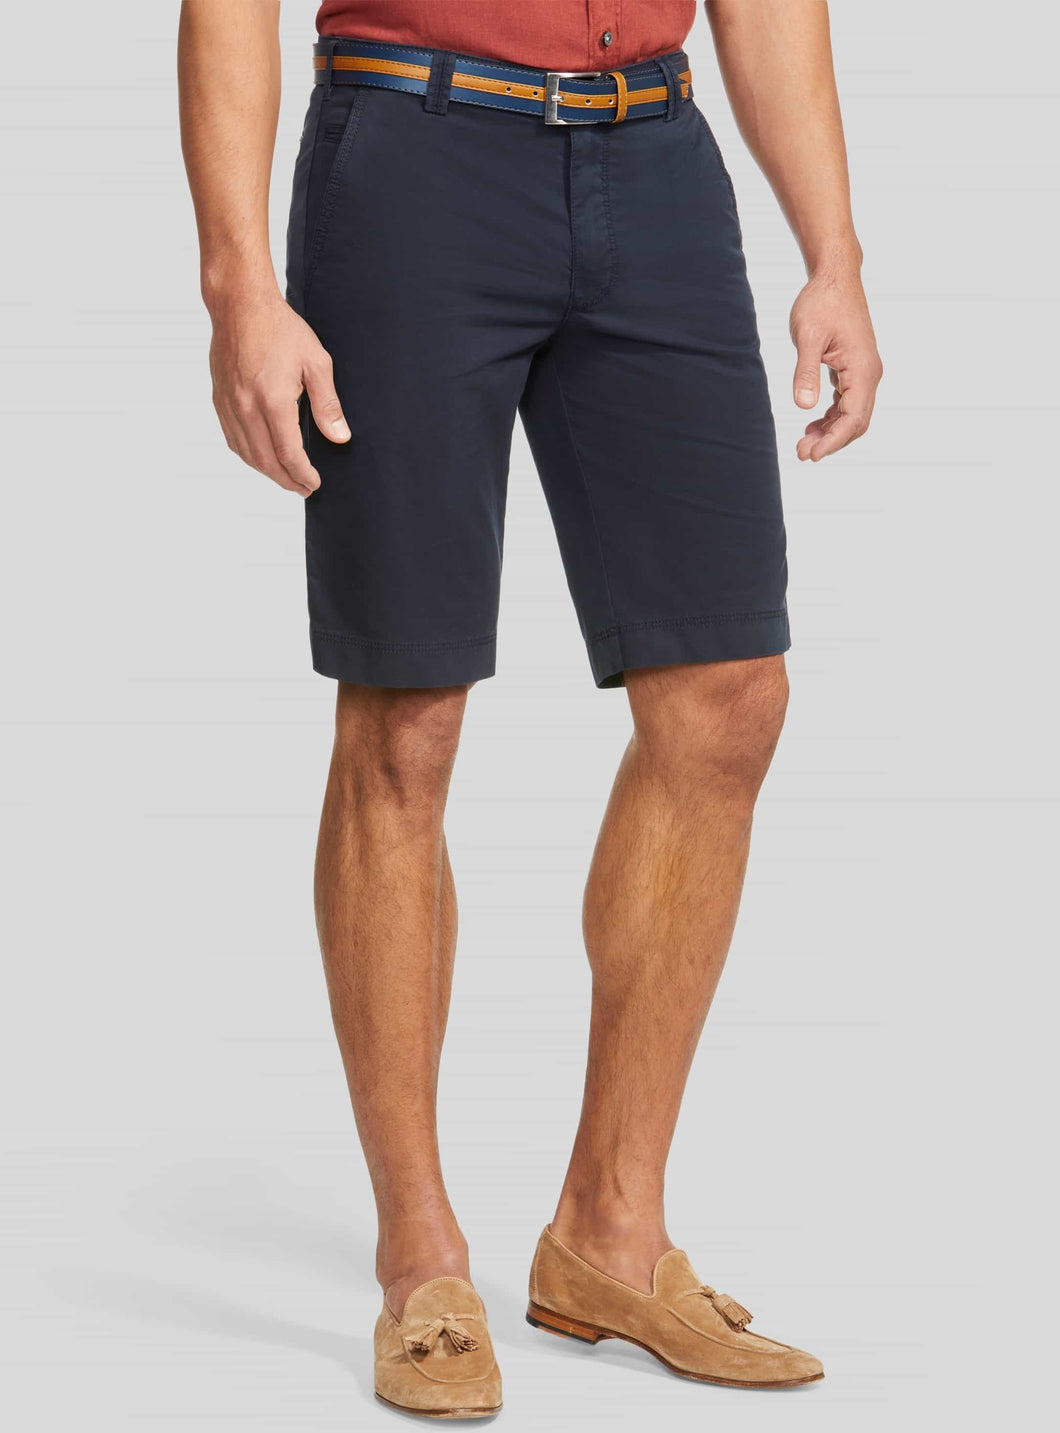 MEYER B-Palma 3011 Shorts - Men's Cotton Twill - Navy